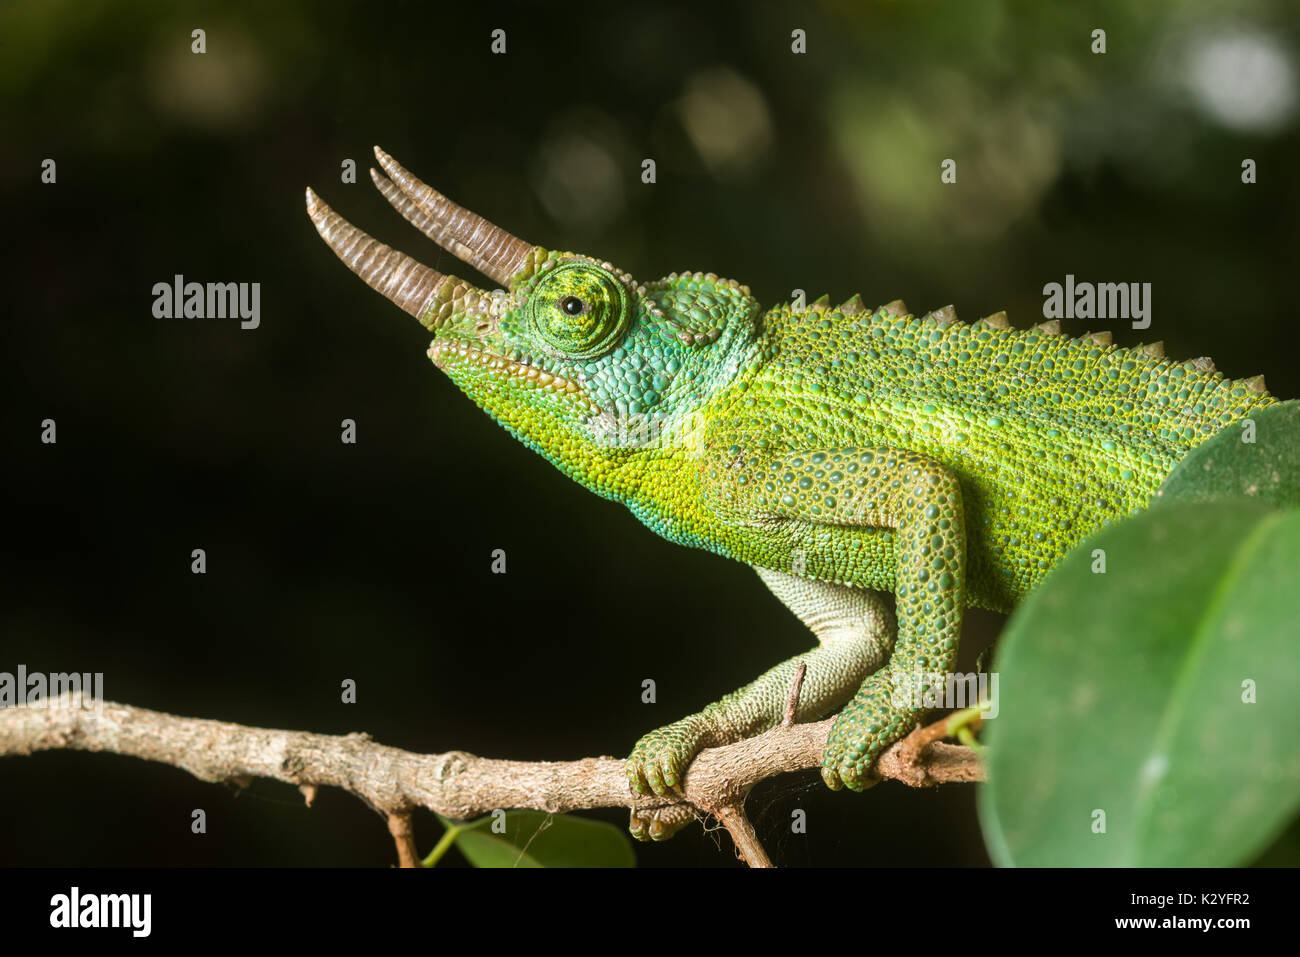 Male adult Jackson's chameleon (Trioceros jacksonii jacksonii) on branch, Nairobi, Kenya Stock Photo